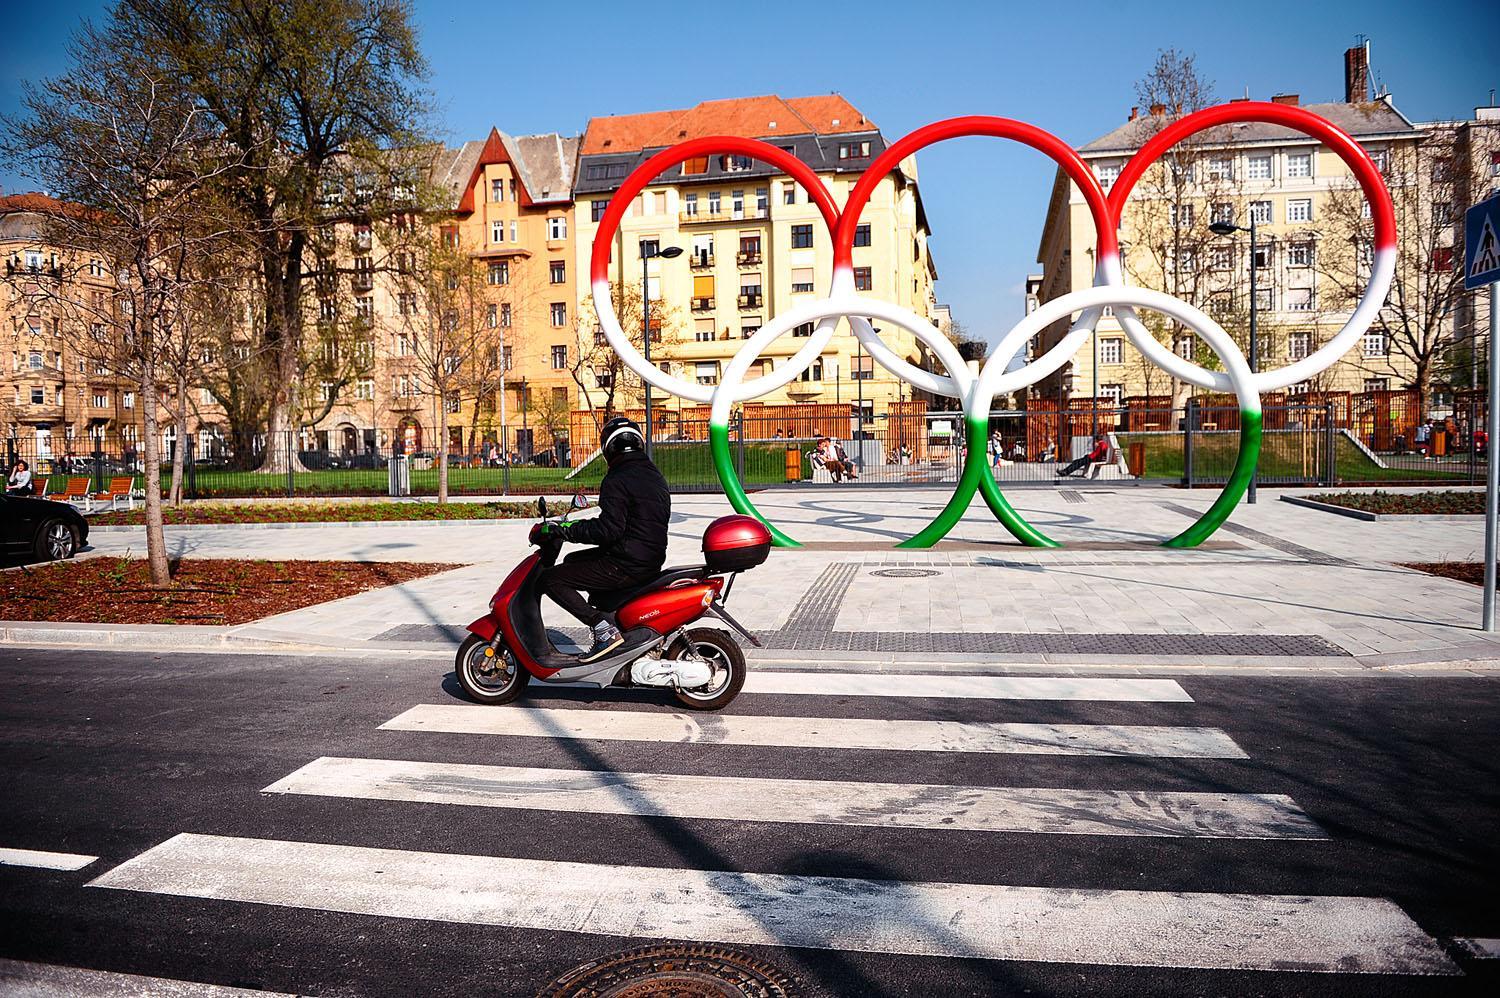 Olimpiai park Budapesten: kezdődik a politikai hullahopp